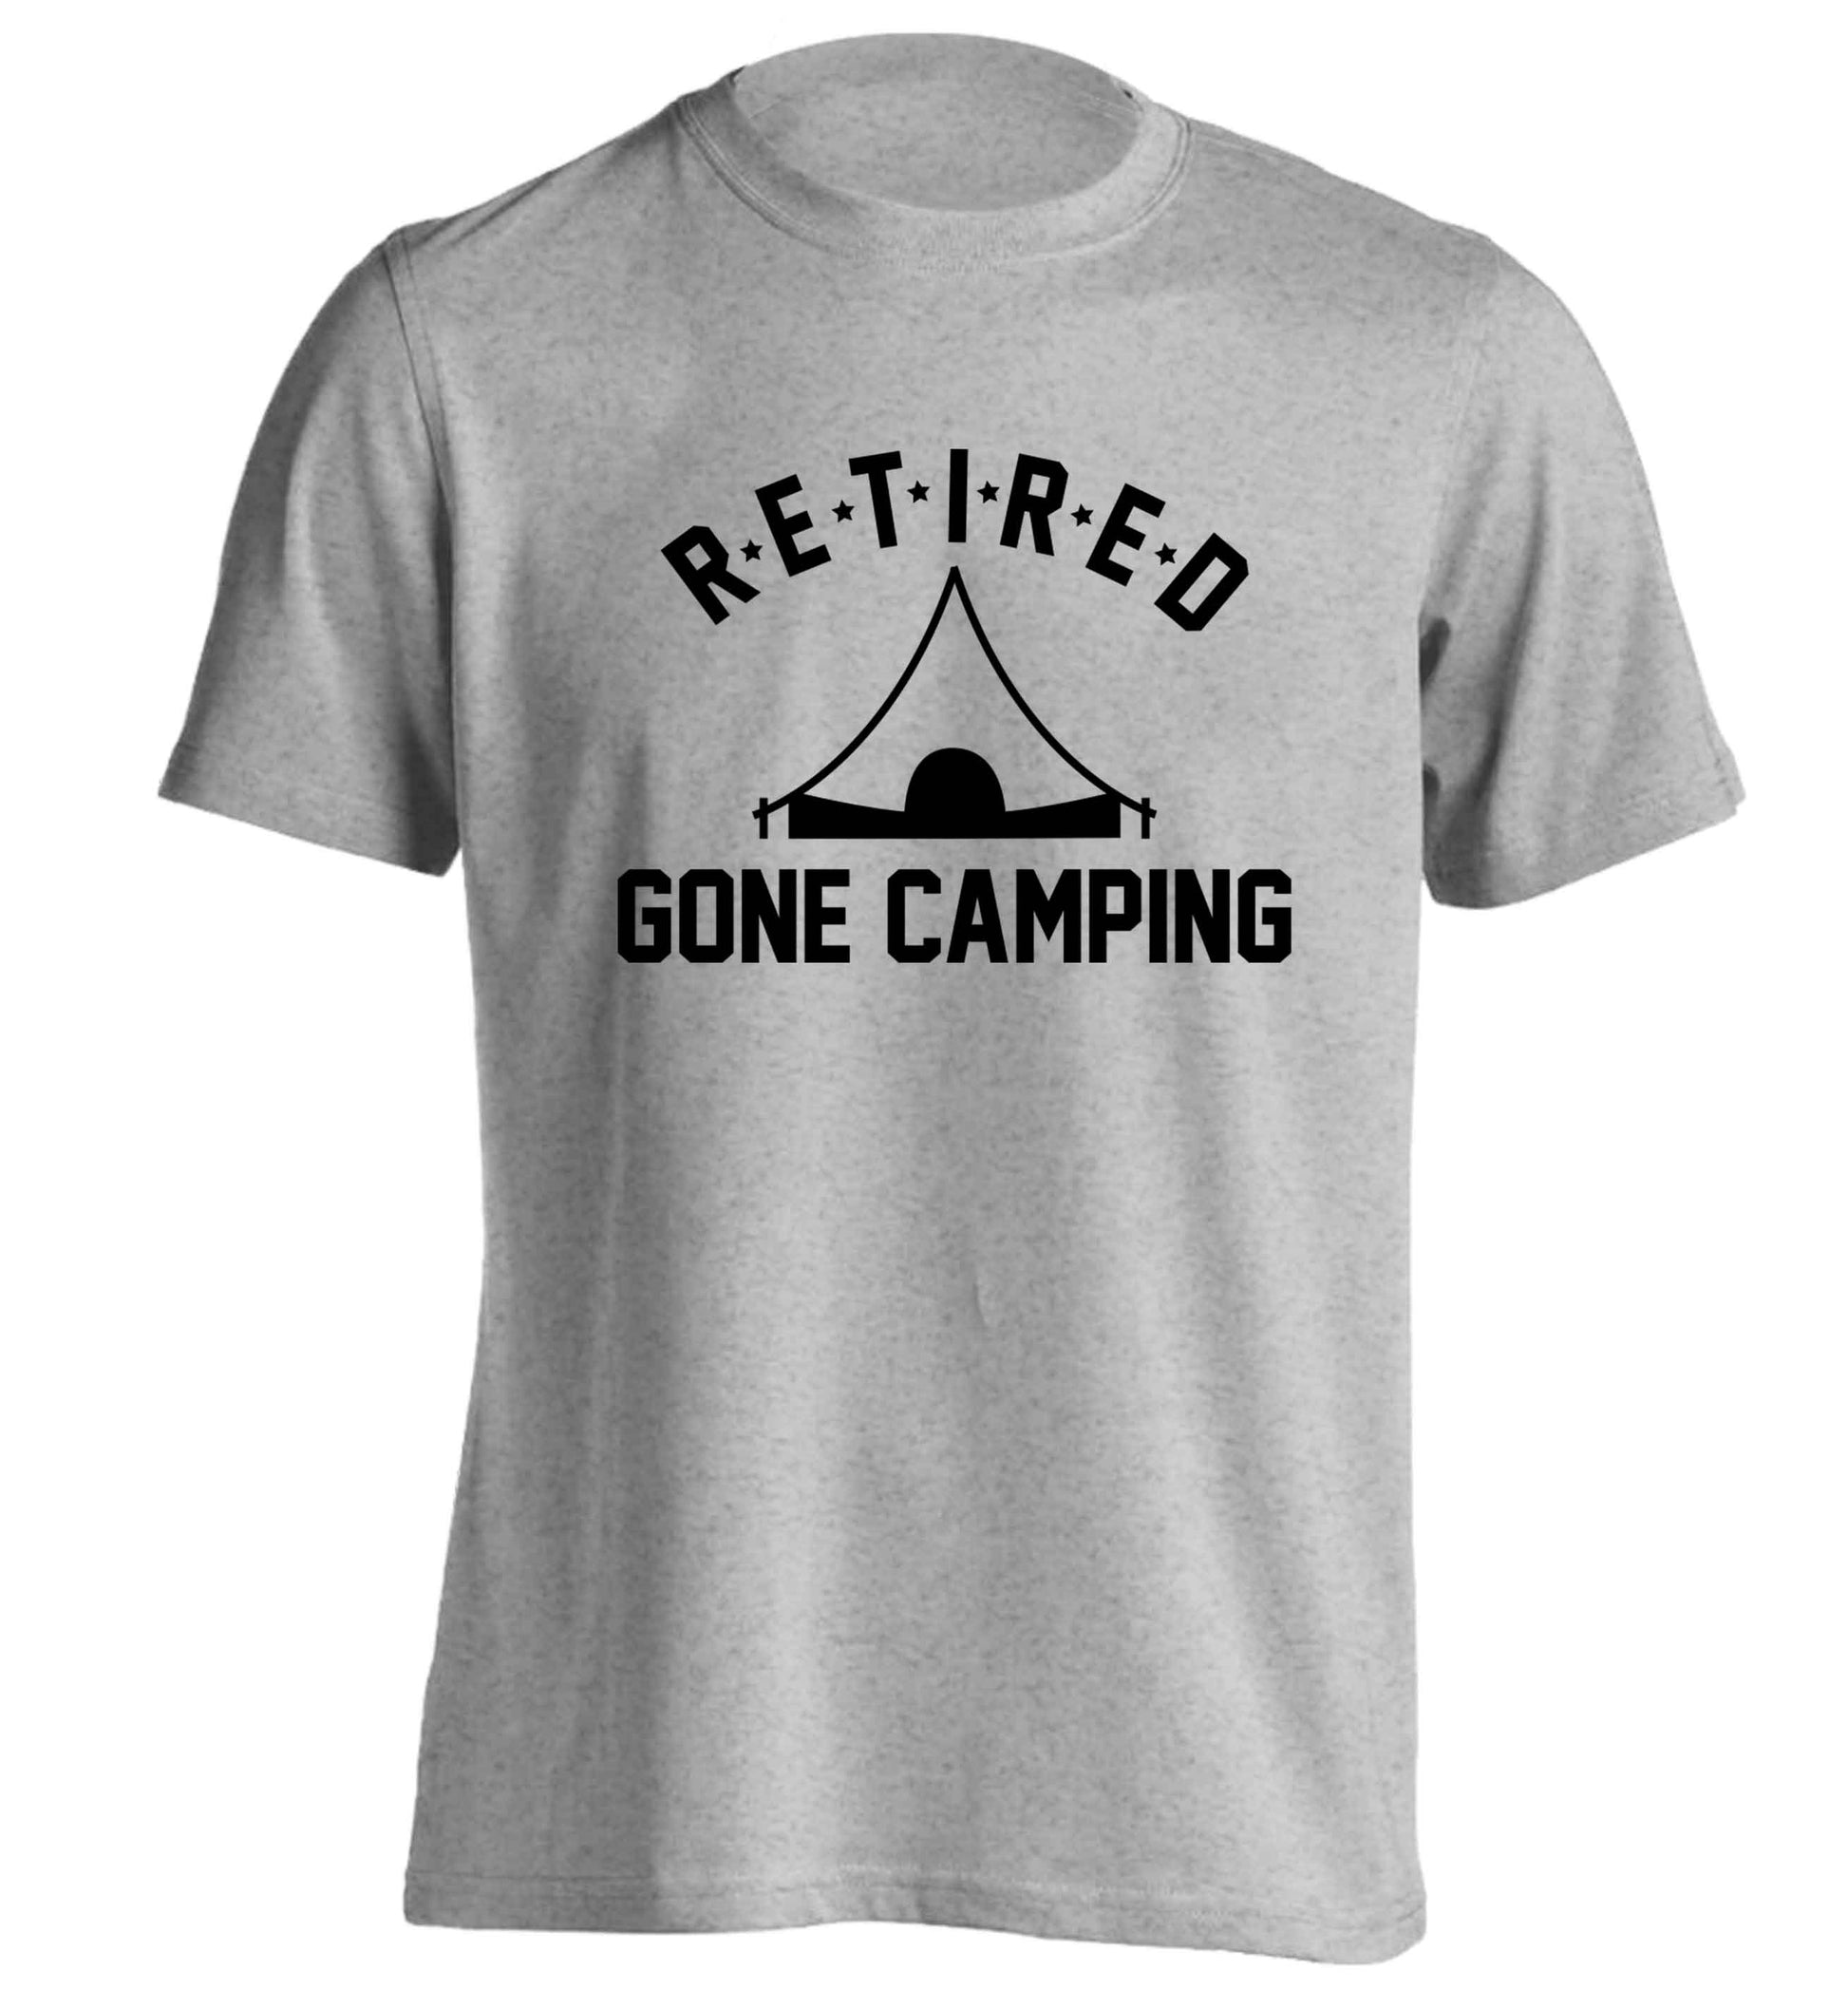 Retired gone camping adults unisex grey Tshirt 2XL